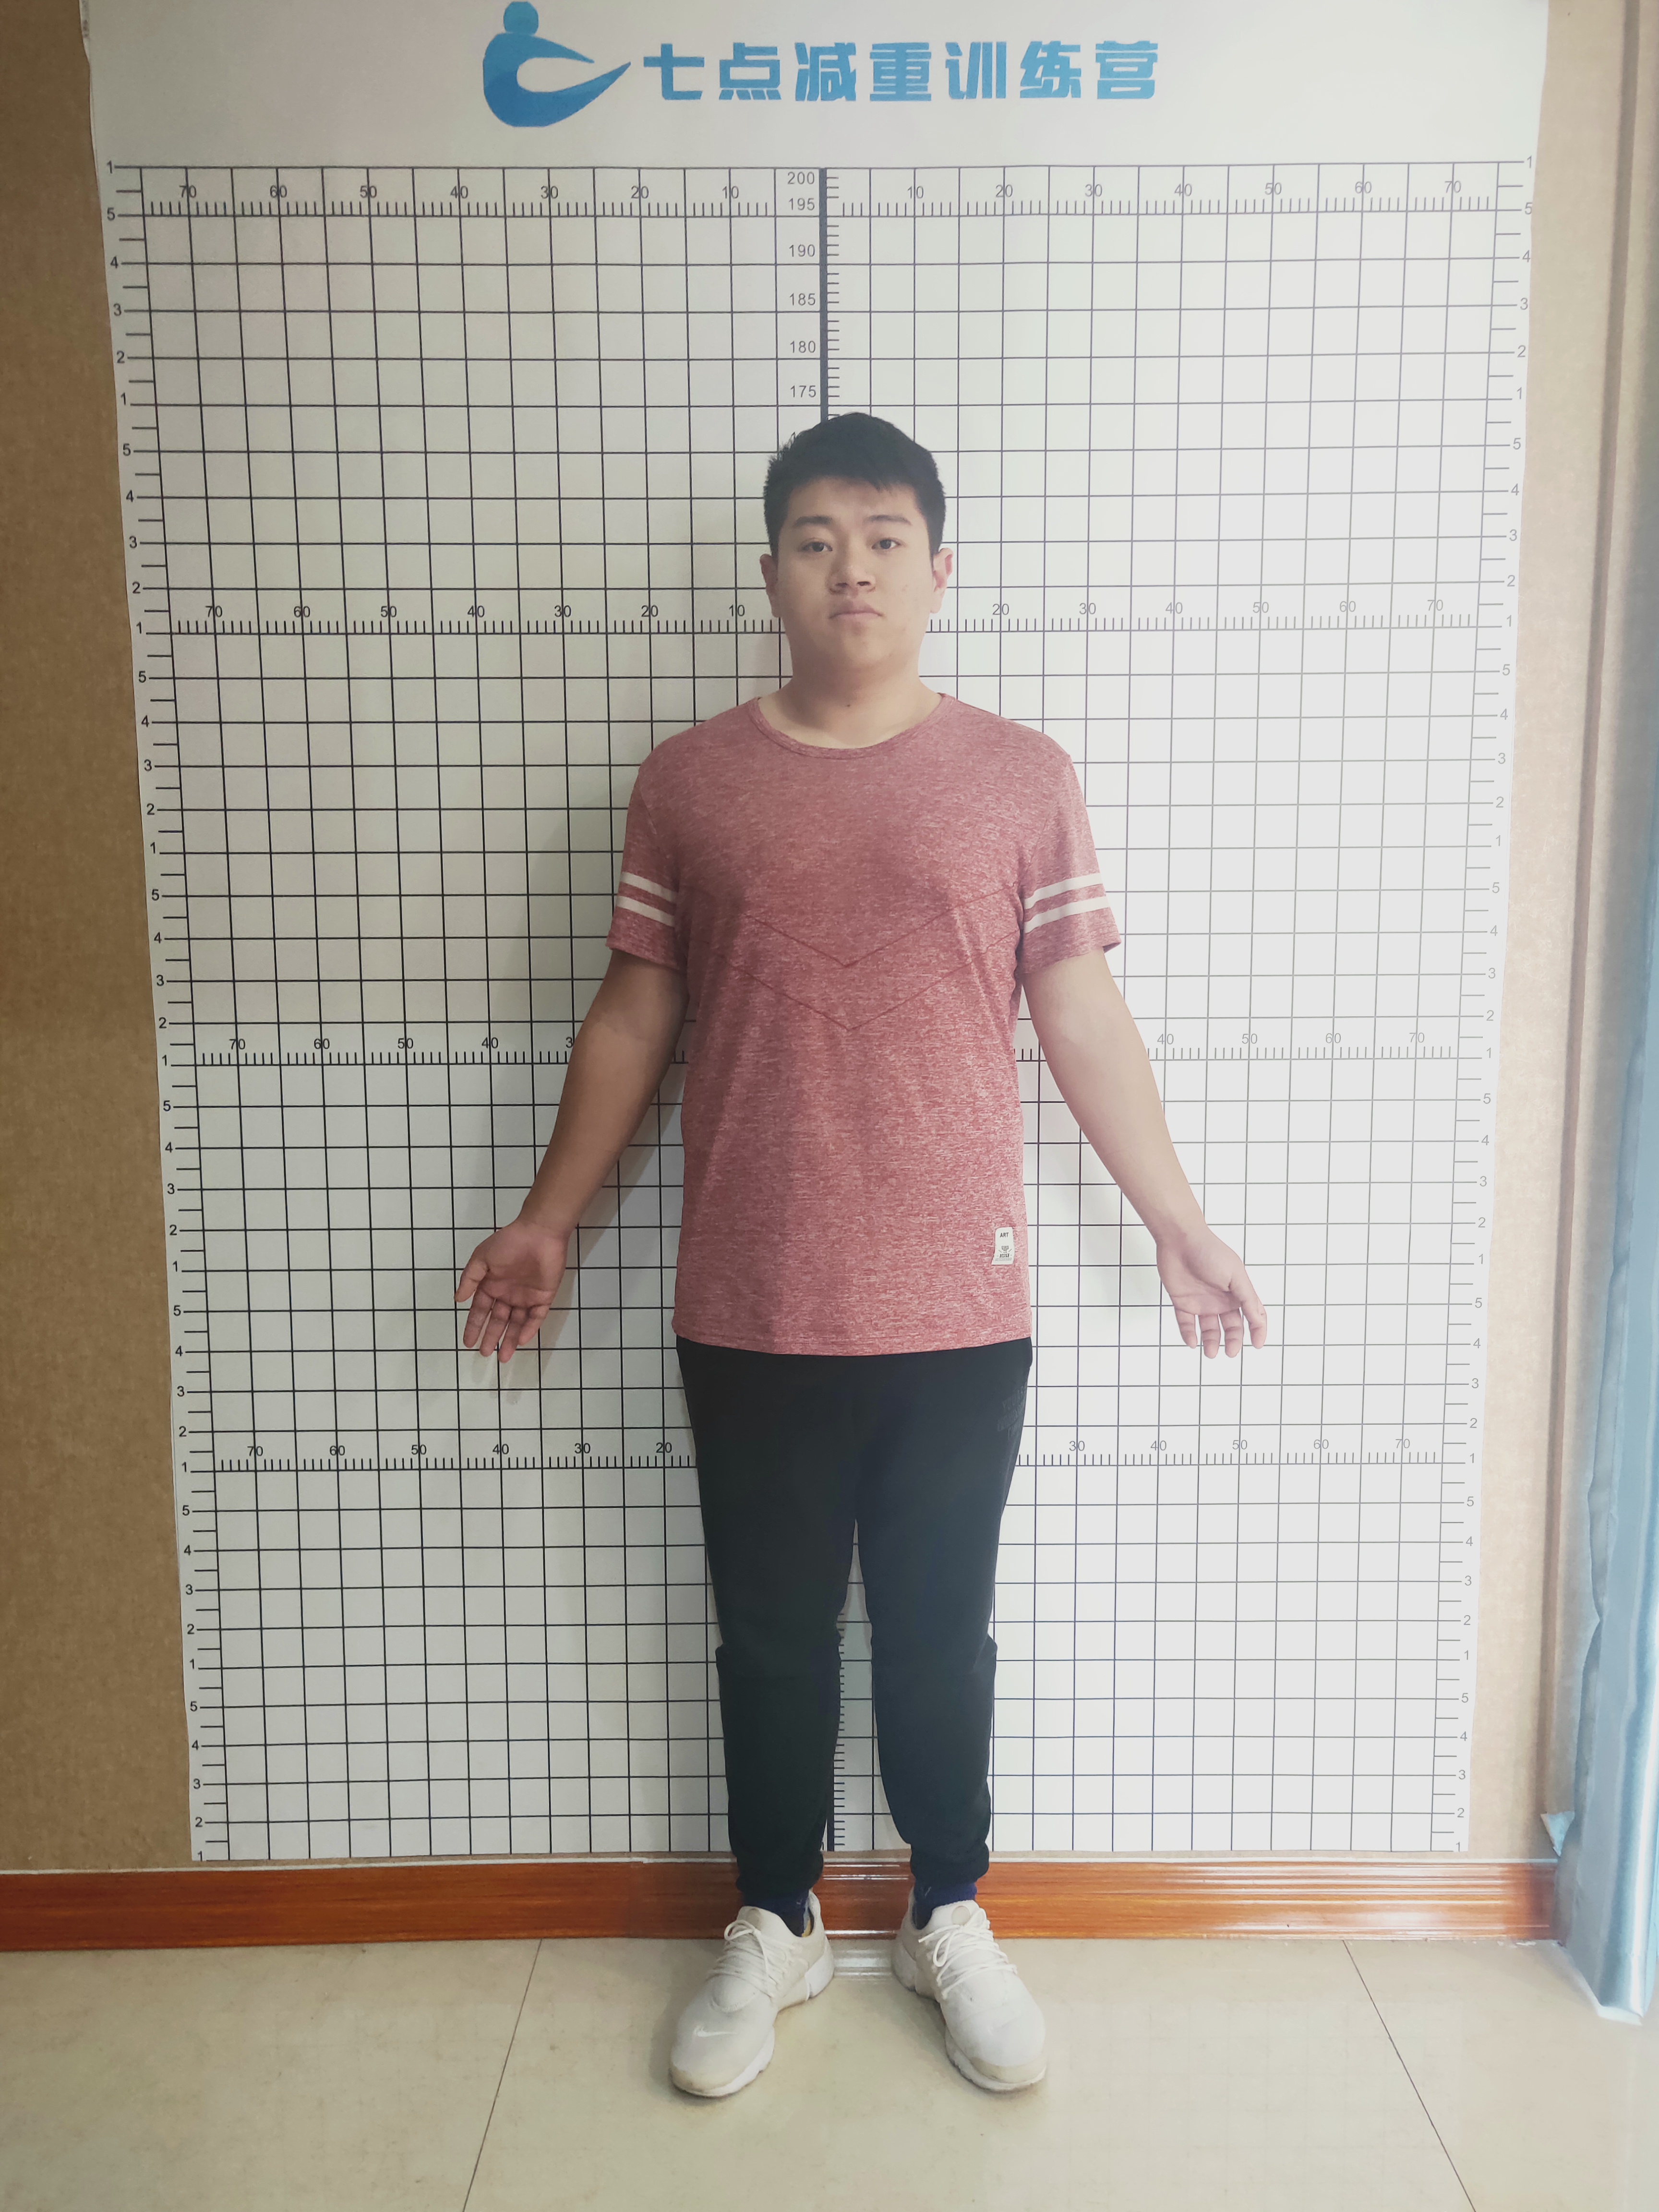 182cm120斤男生照片图片